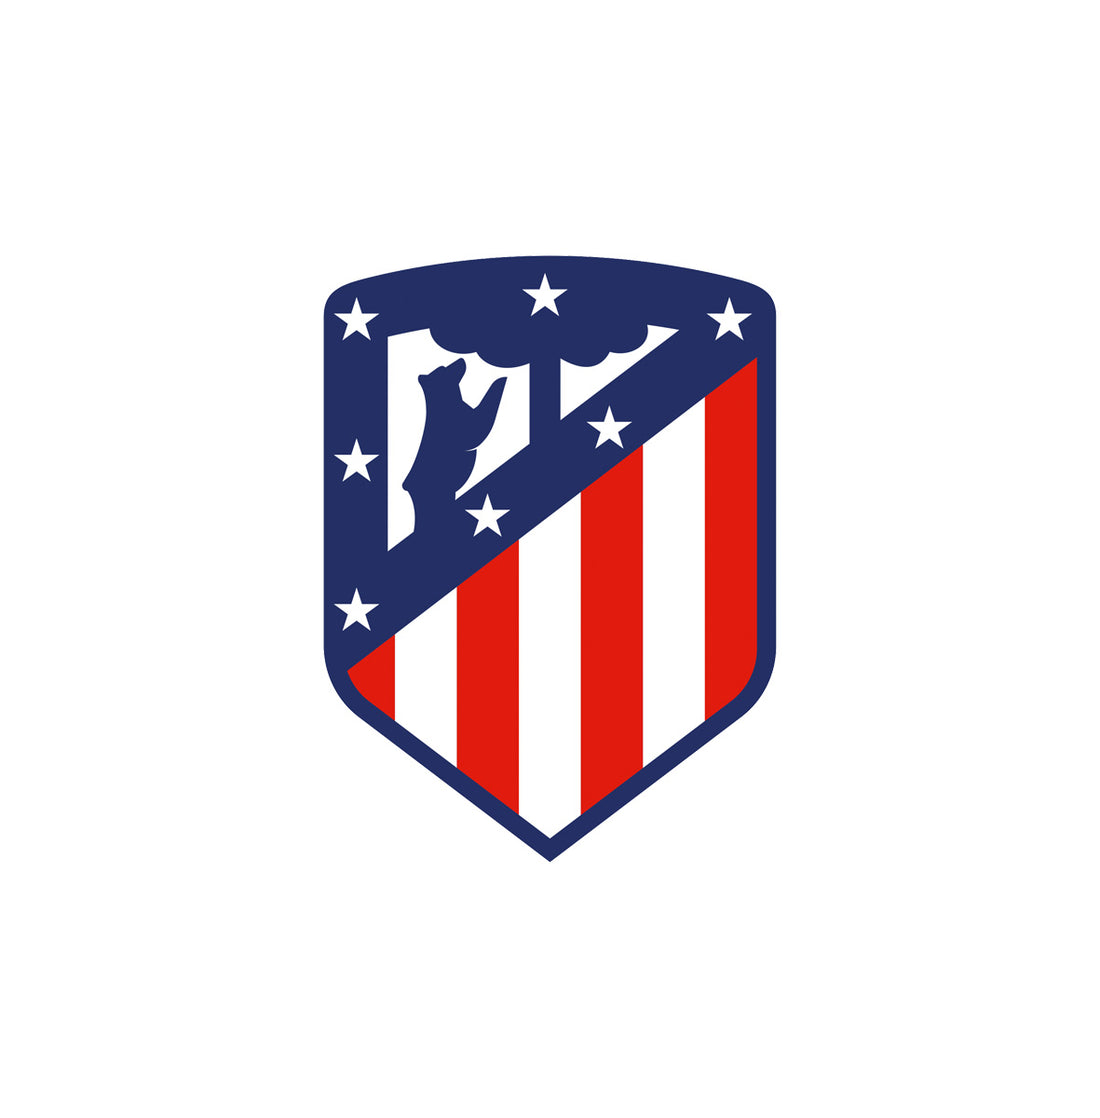  Atlético Madrid Colletion